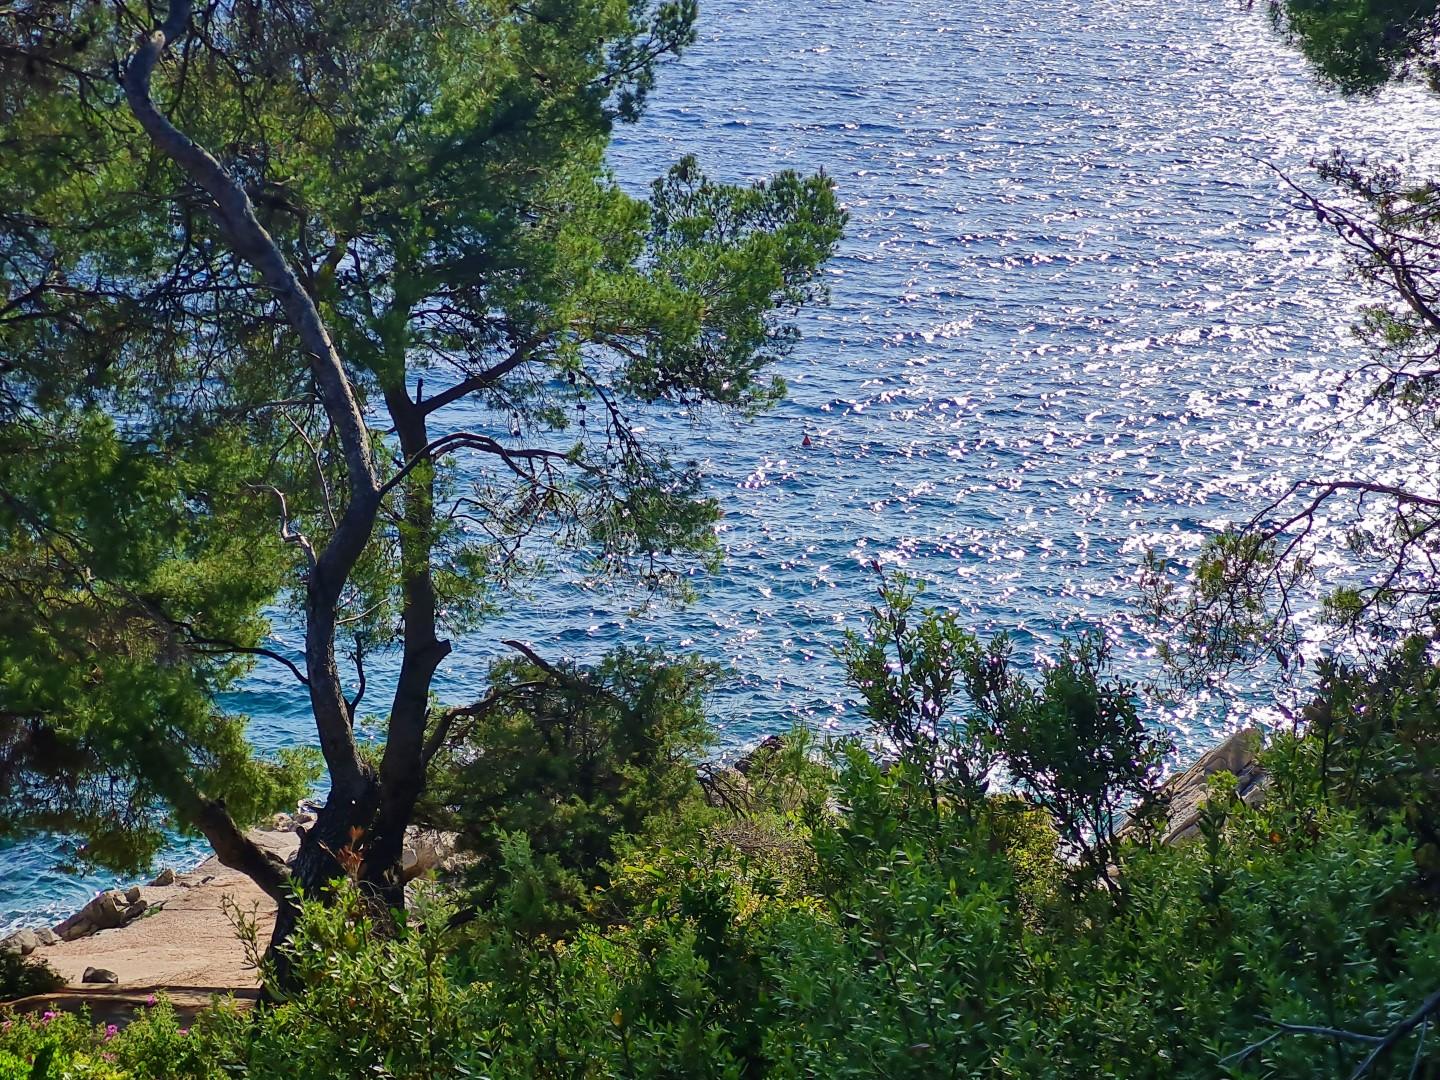 Croatia island of Korcula beautiful seafront house for sale